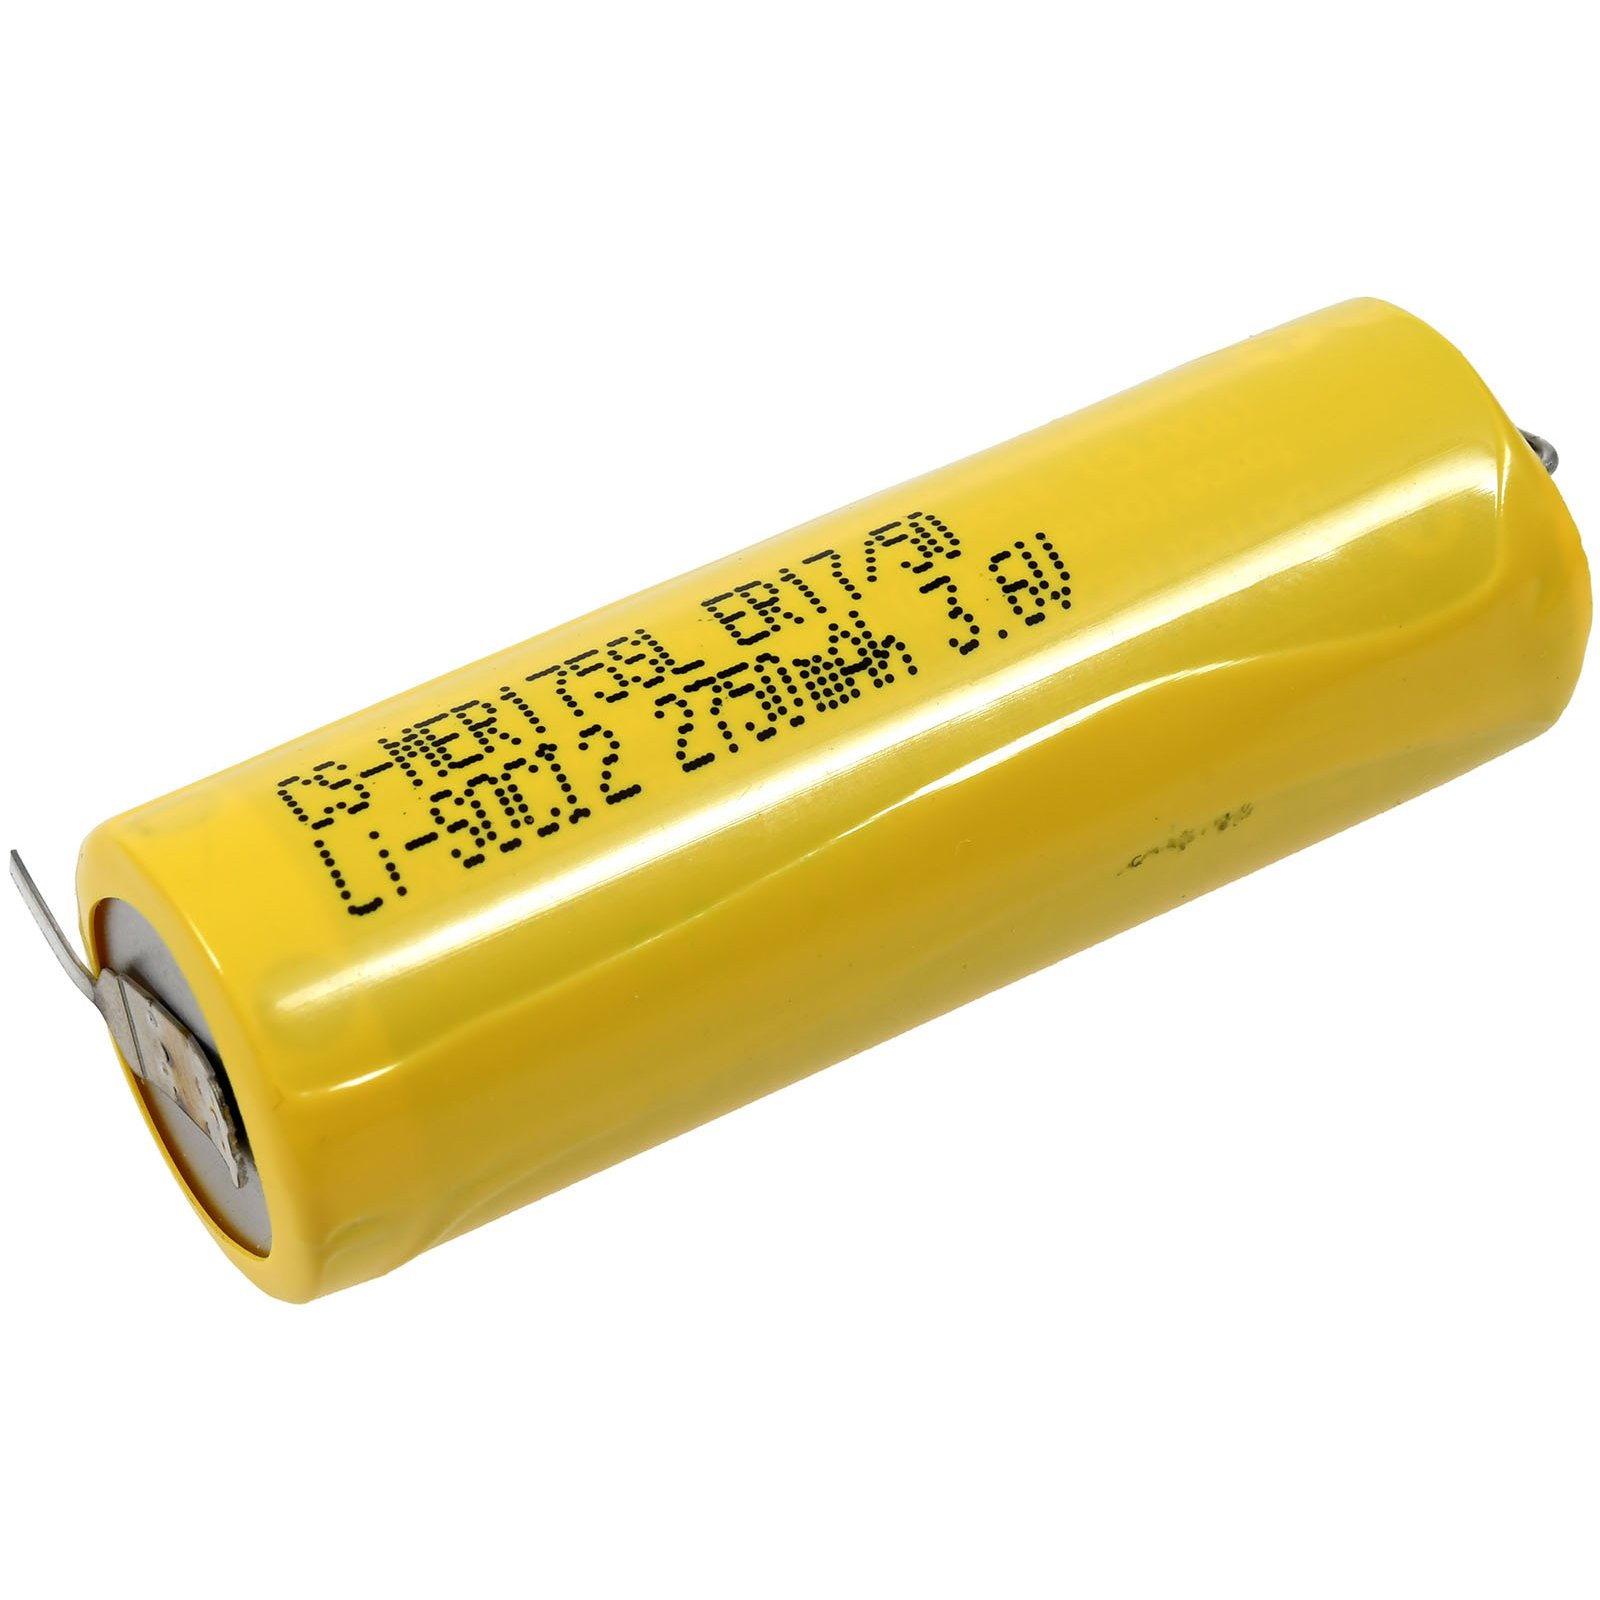 ER17/50 2750mAh Volt, für Batterie, POWERY 3.6 Maxell Lithium-Thionylchlorid SPS-Lithiumbatterie